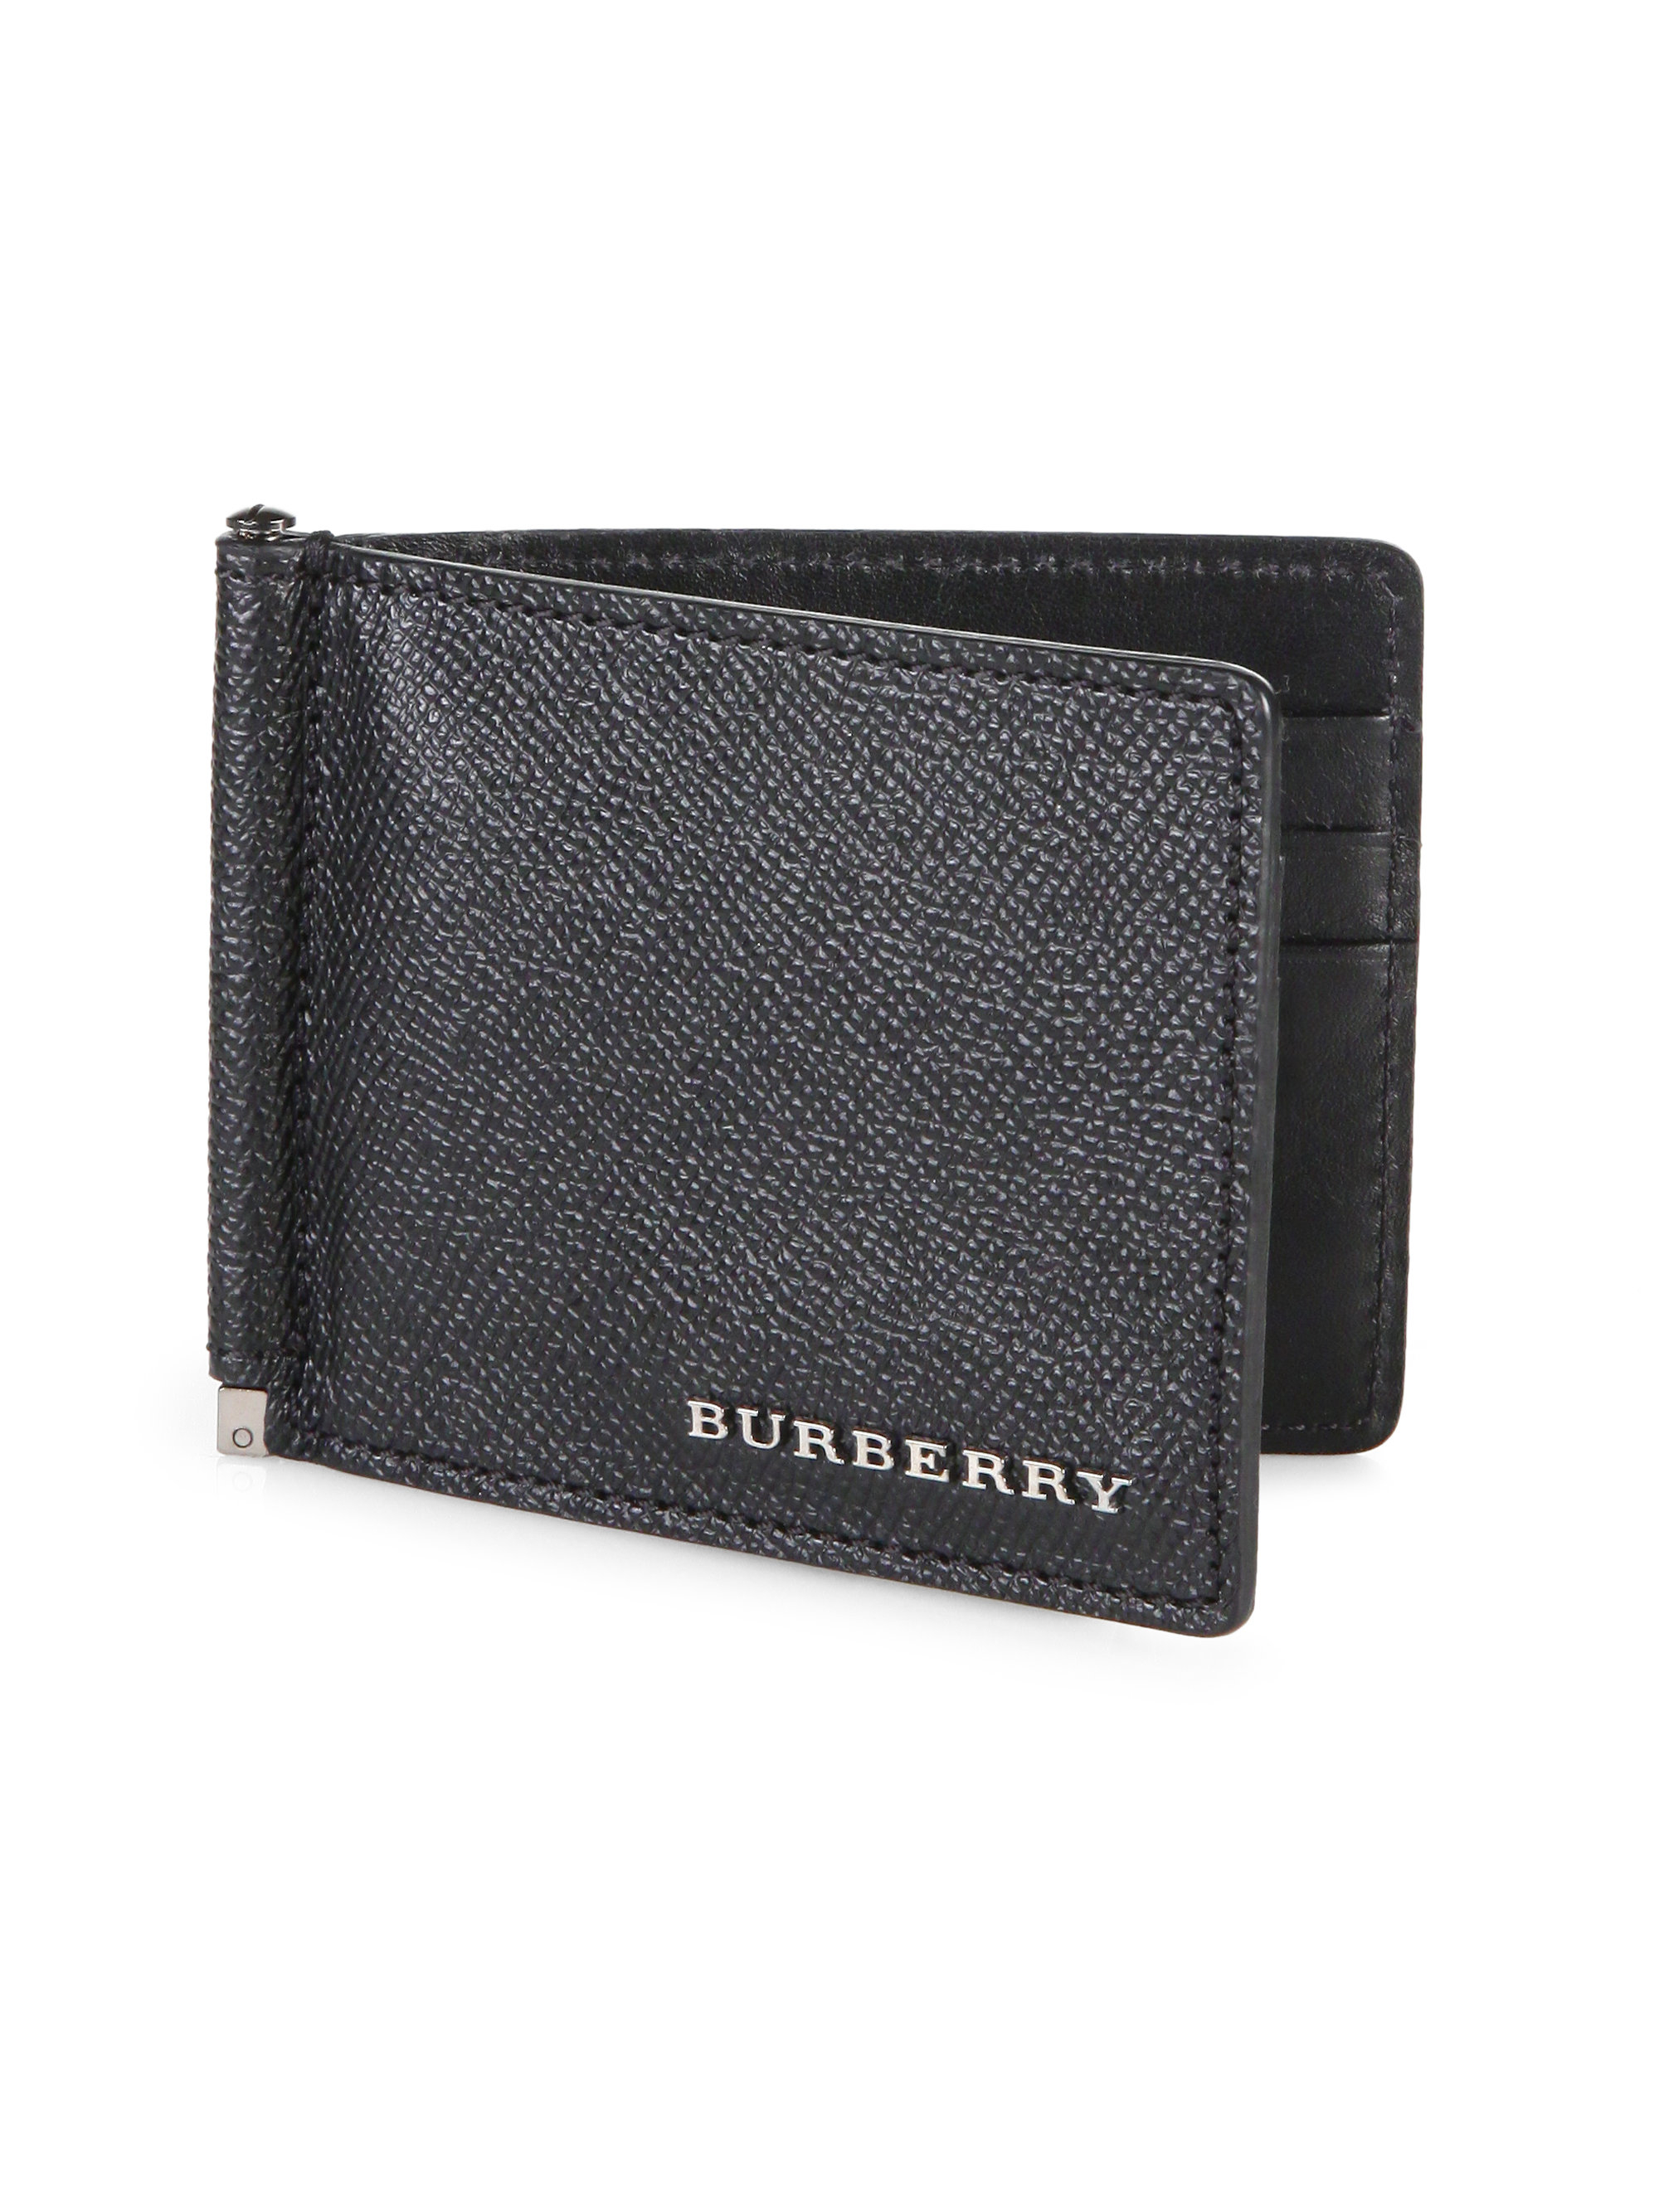 burberry card holder money clip